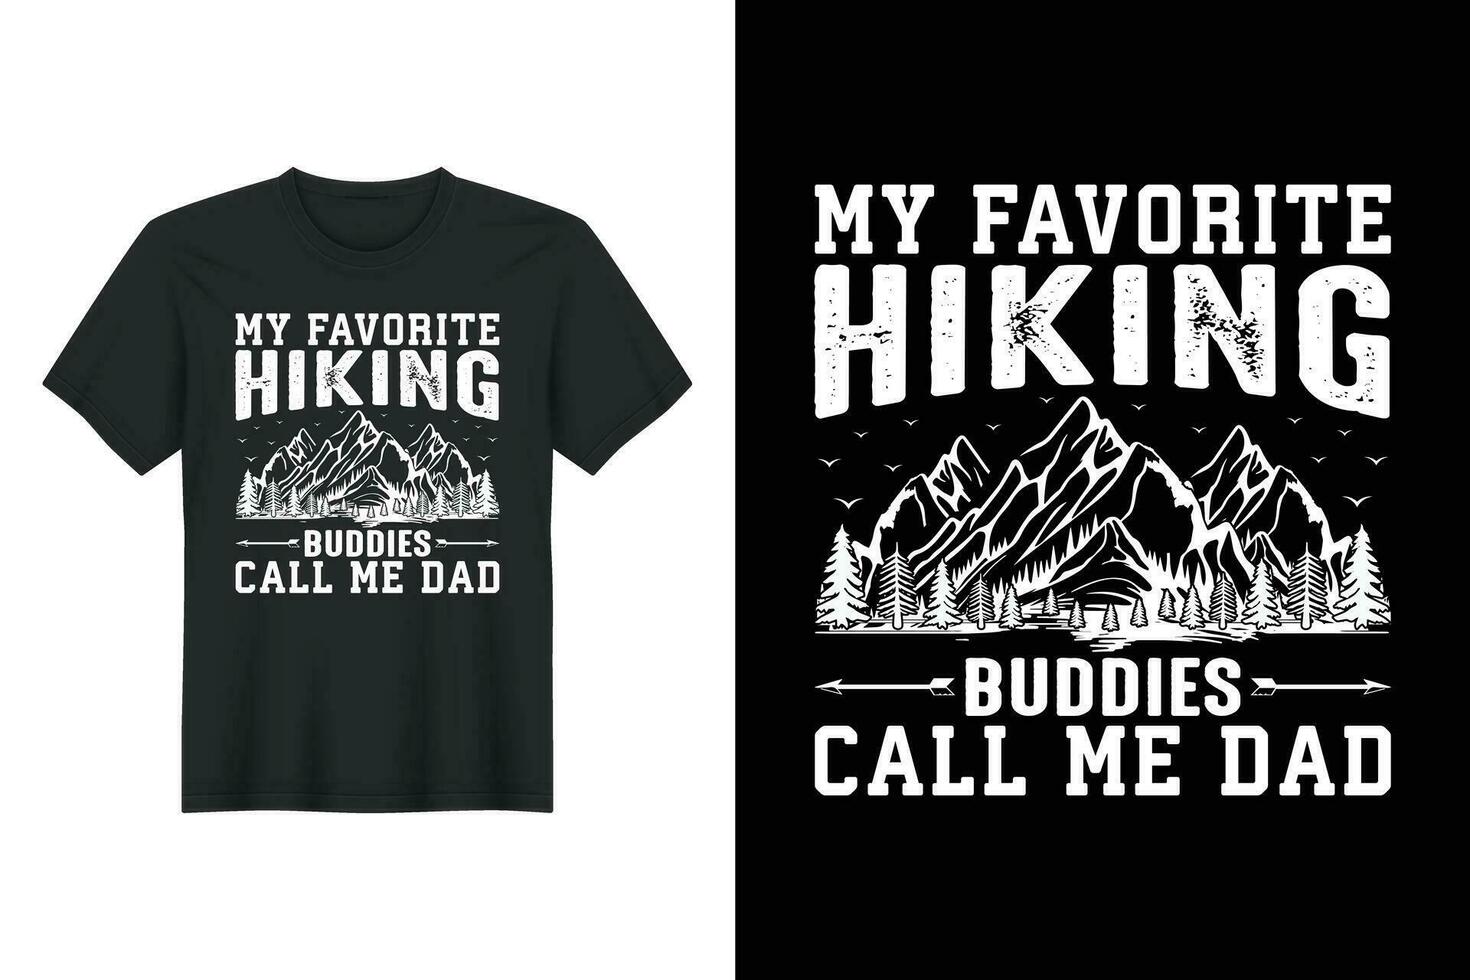 My Favorite Hiking Buddies Call Me Dad, Hiking T-shirt Design vector